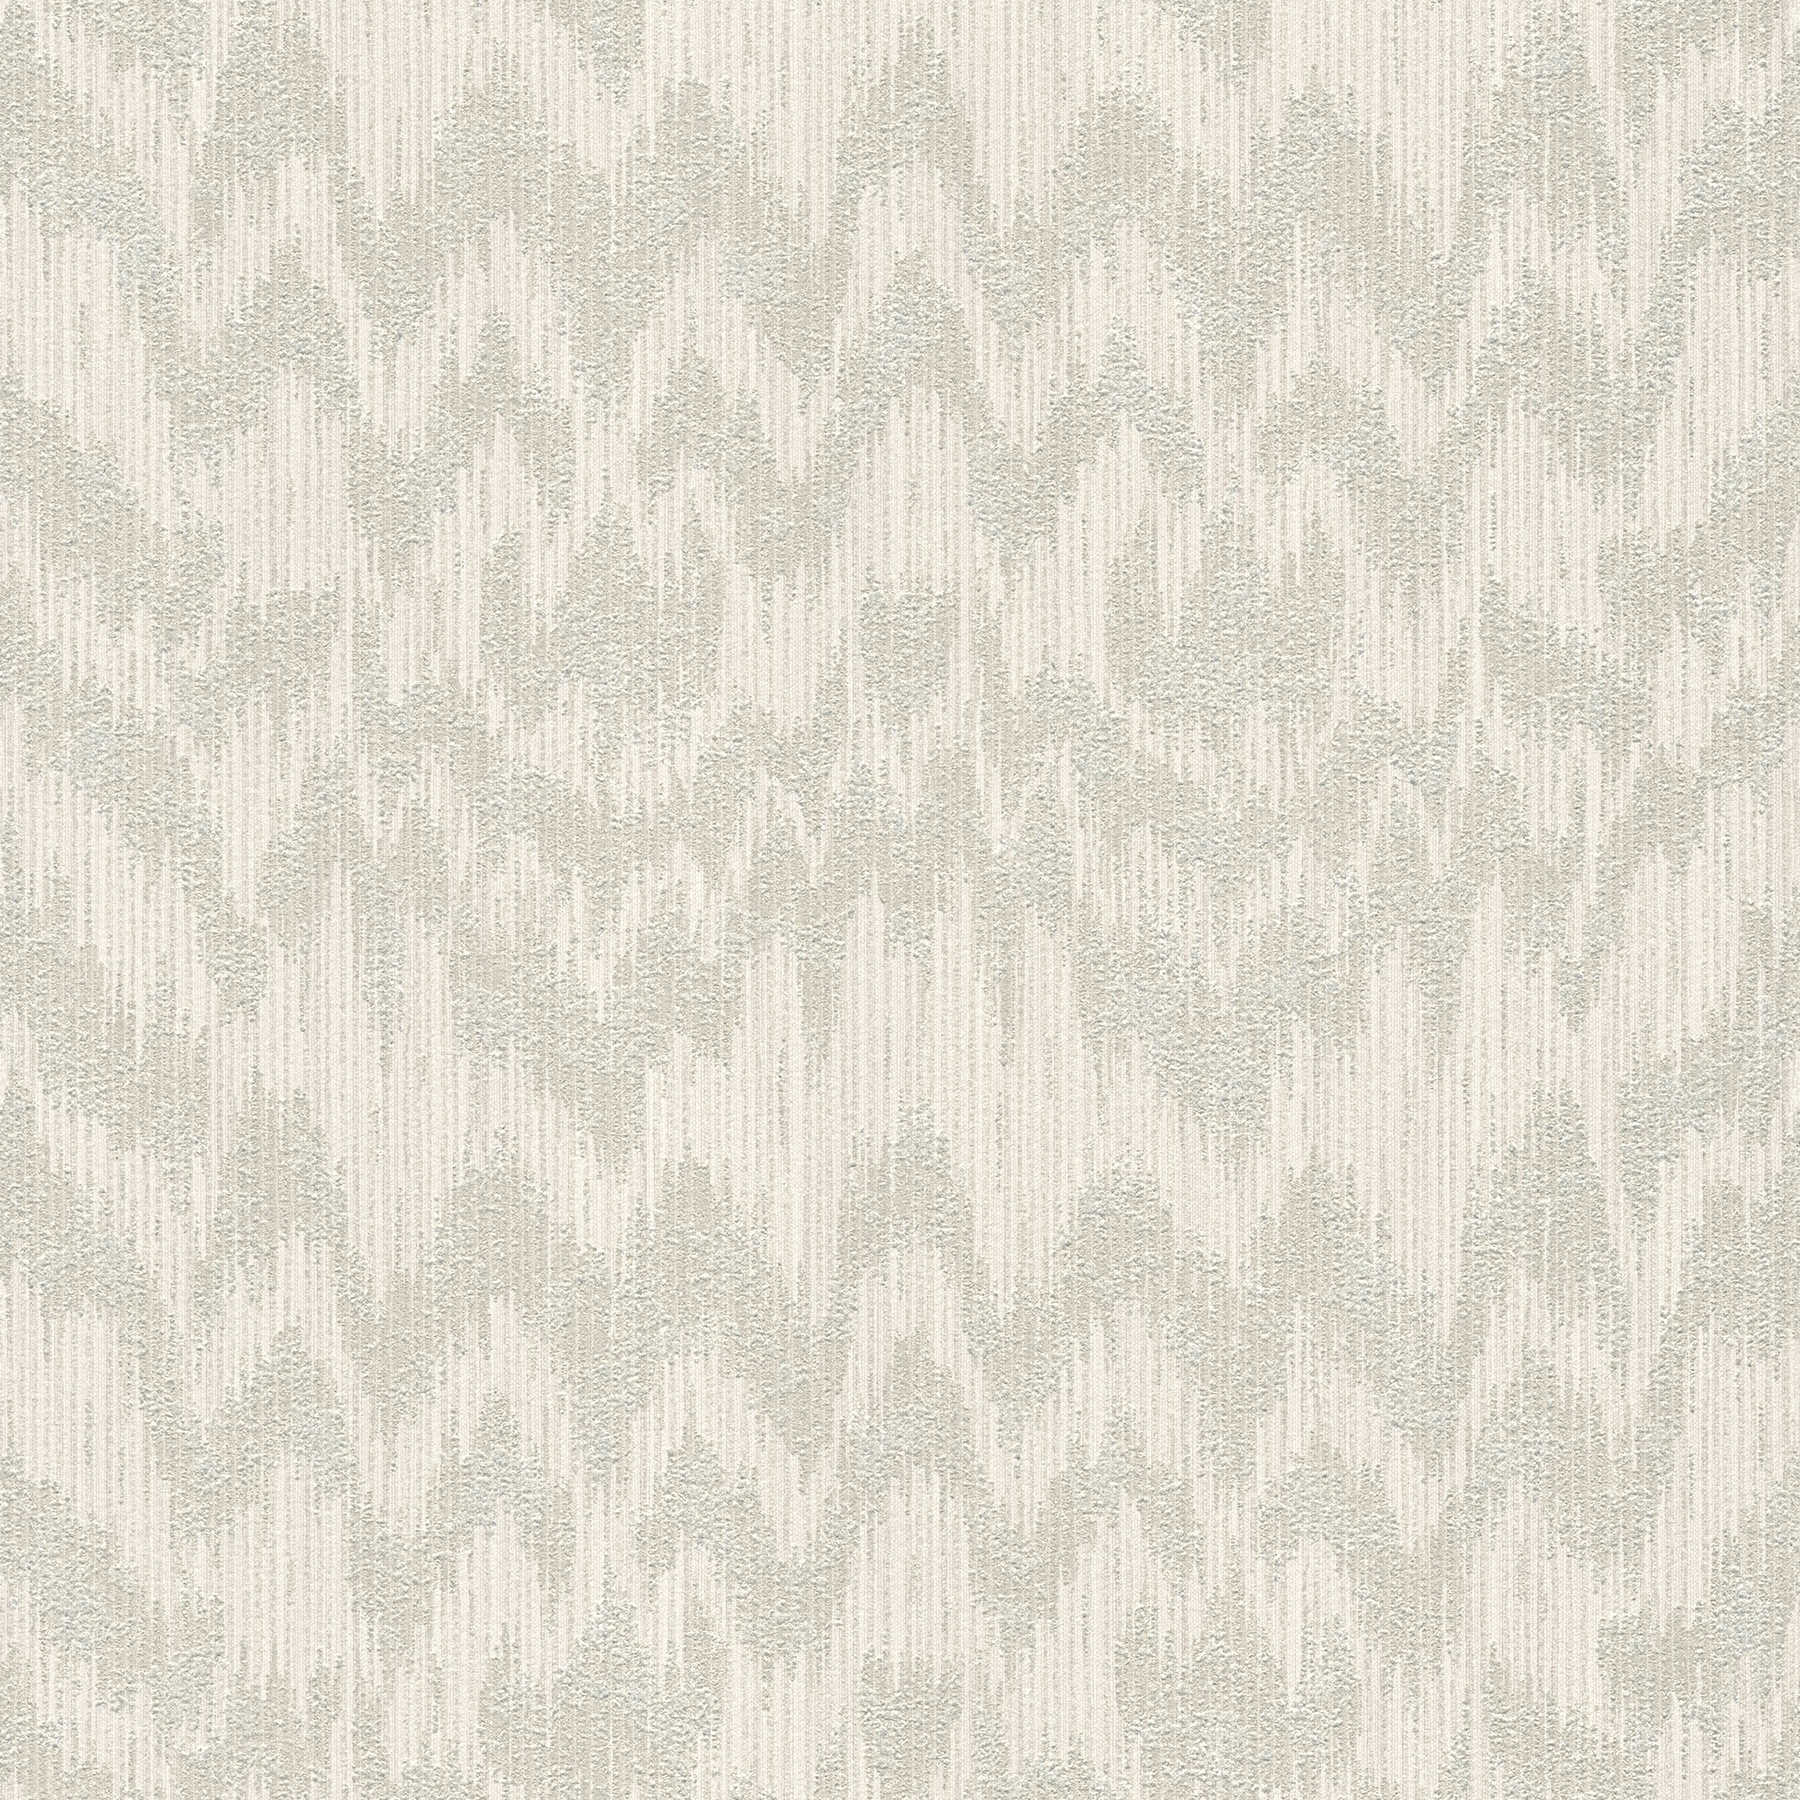 Wallpaper ikat pattern with texture effect - beige, metallic
